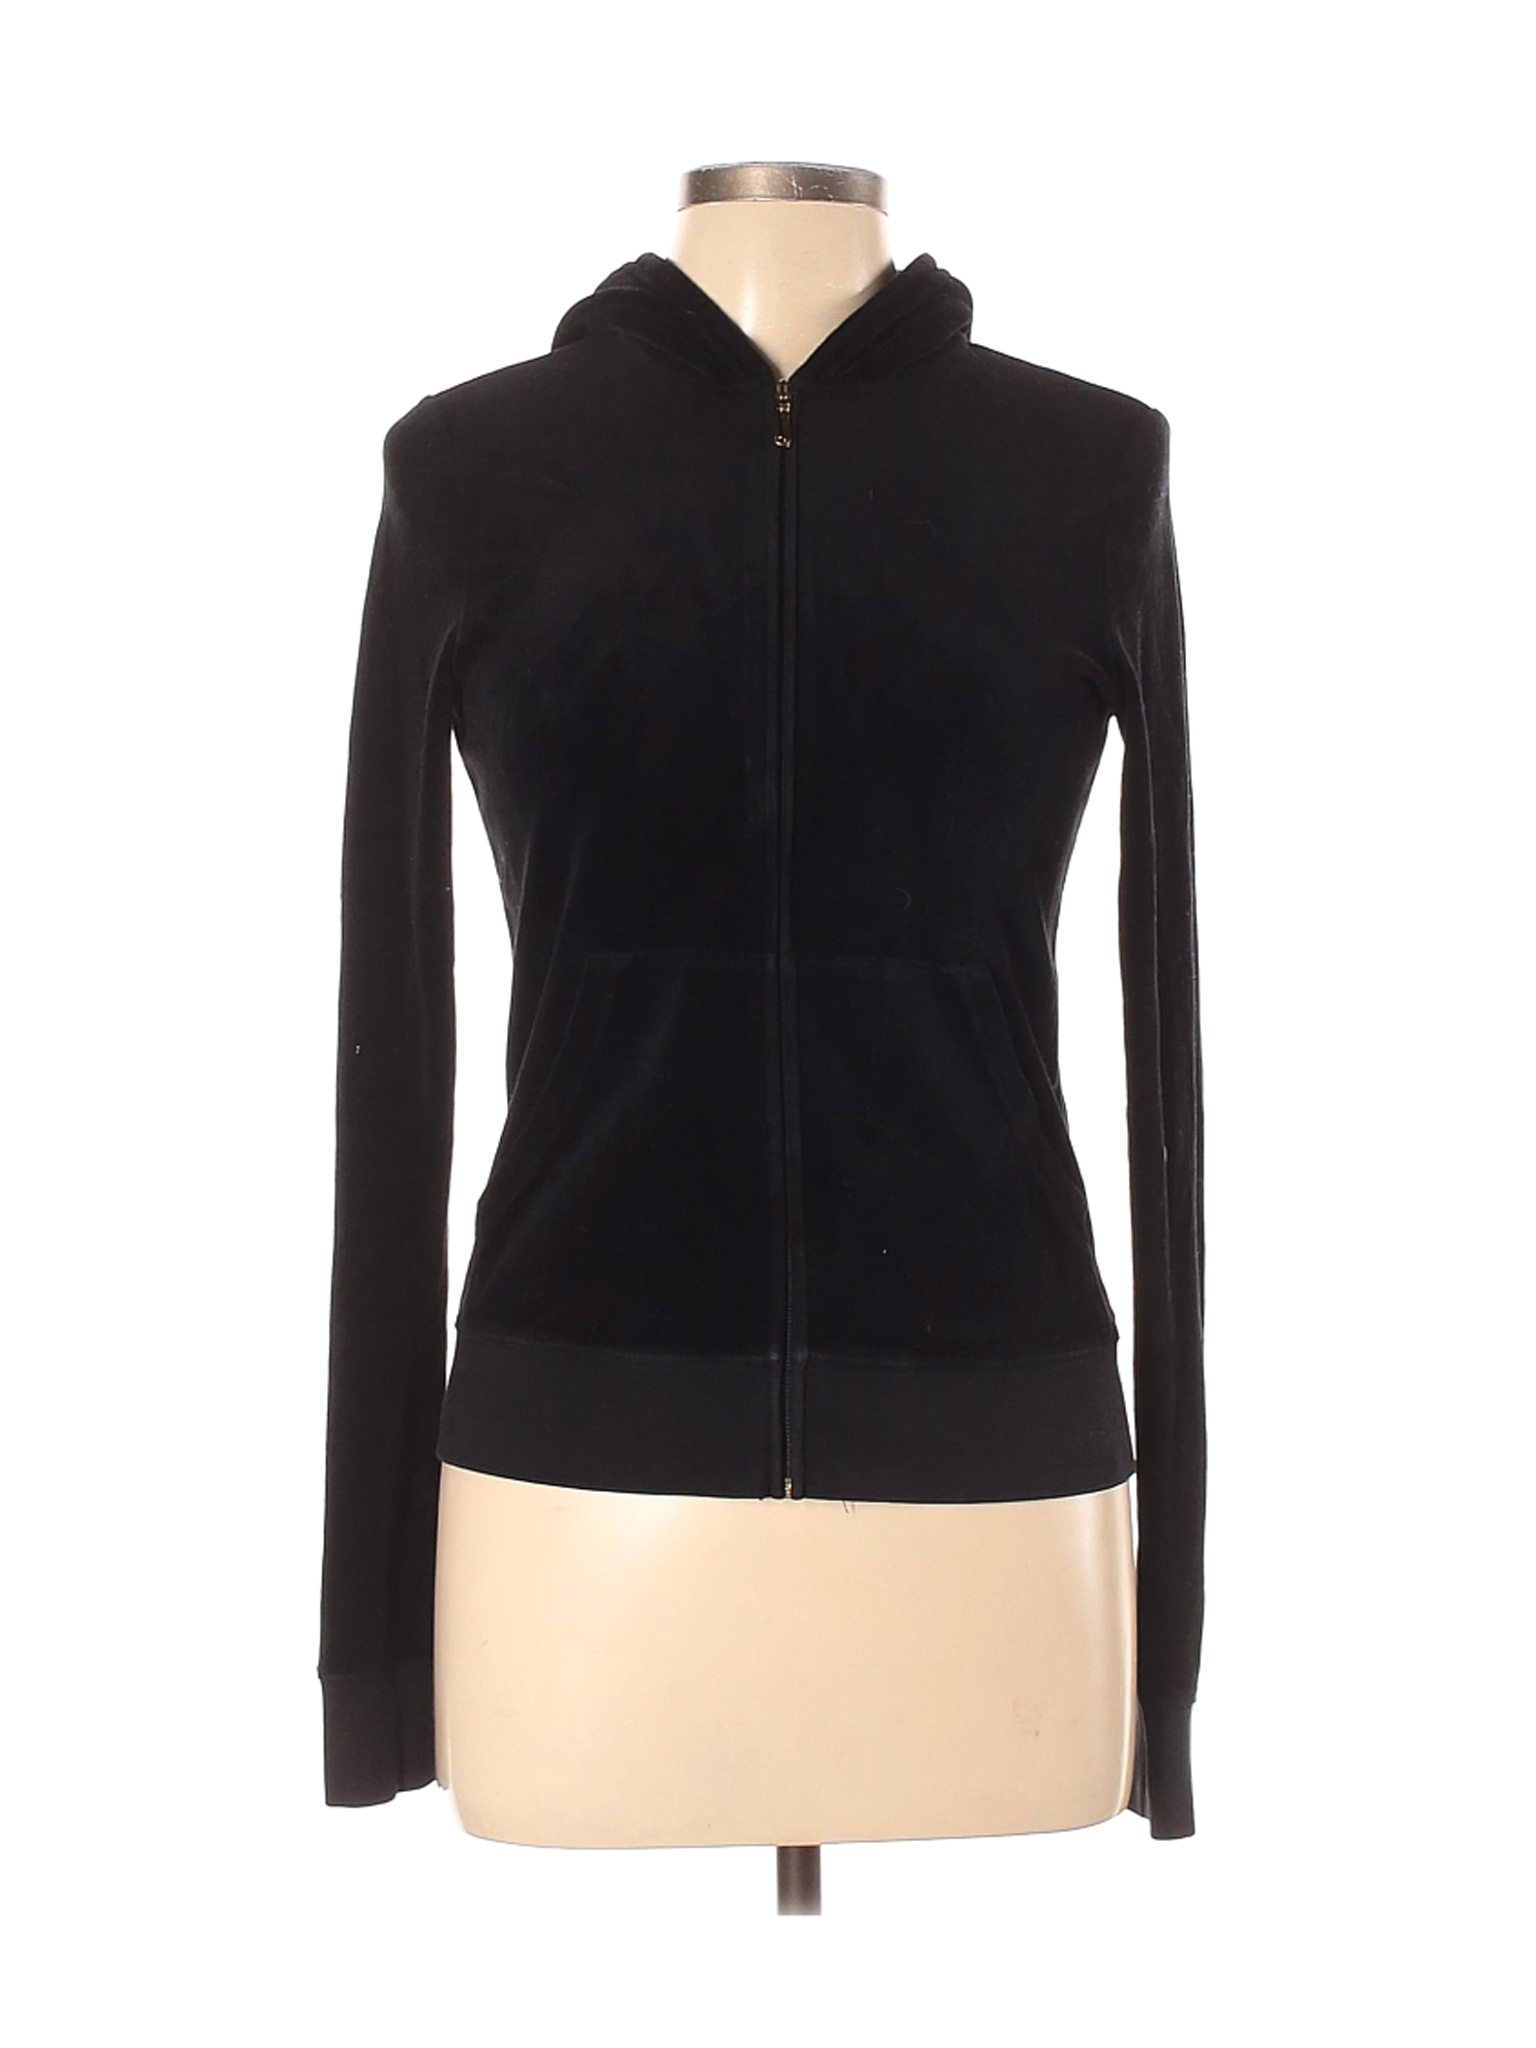 Juicy Couture Women Black Zip Up Hoodie L | eBay